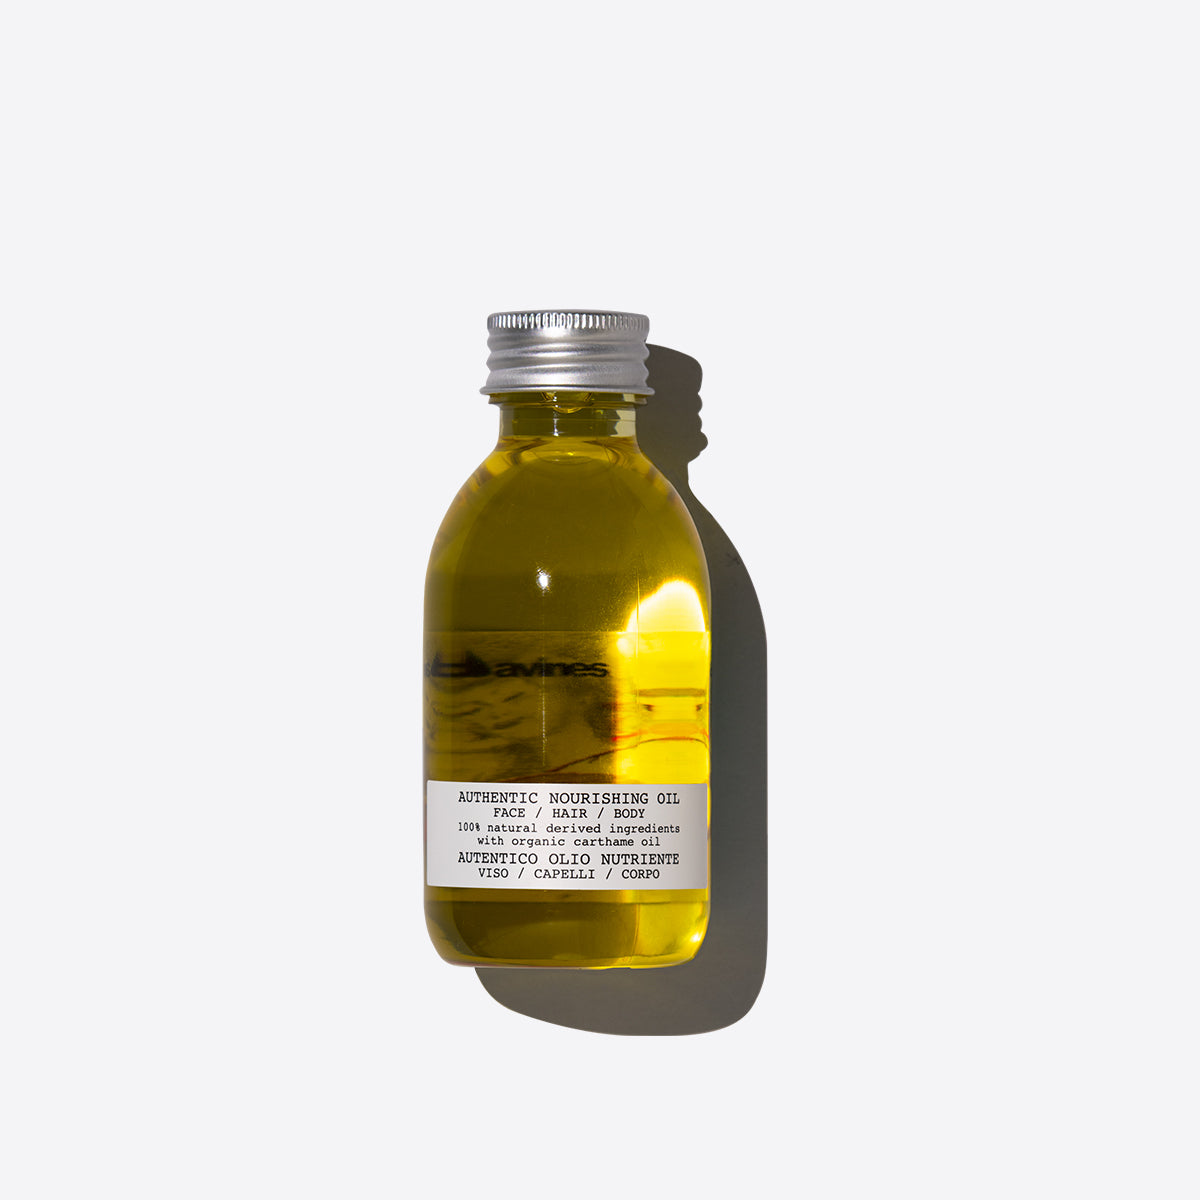 Davines 74012 AUTHENTIC NOURISHING OIL - Питательное масло для лица, волос, тела 140 ml